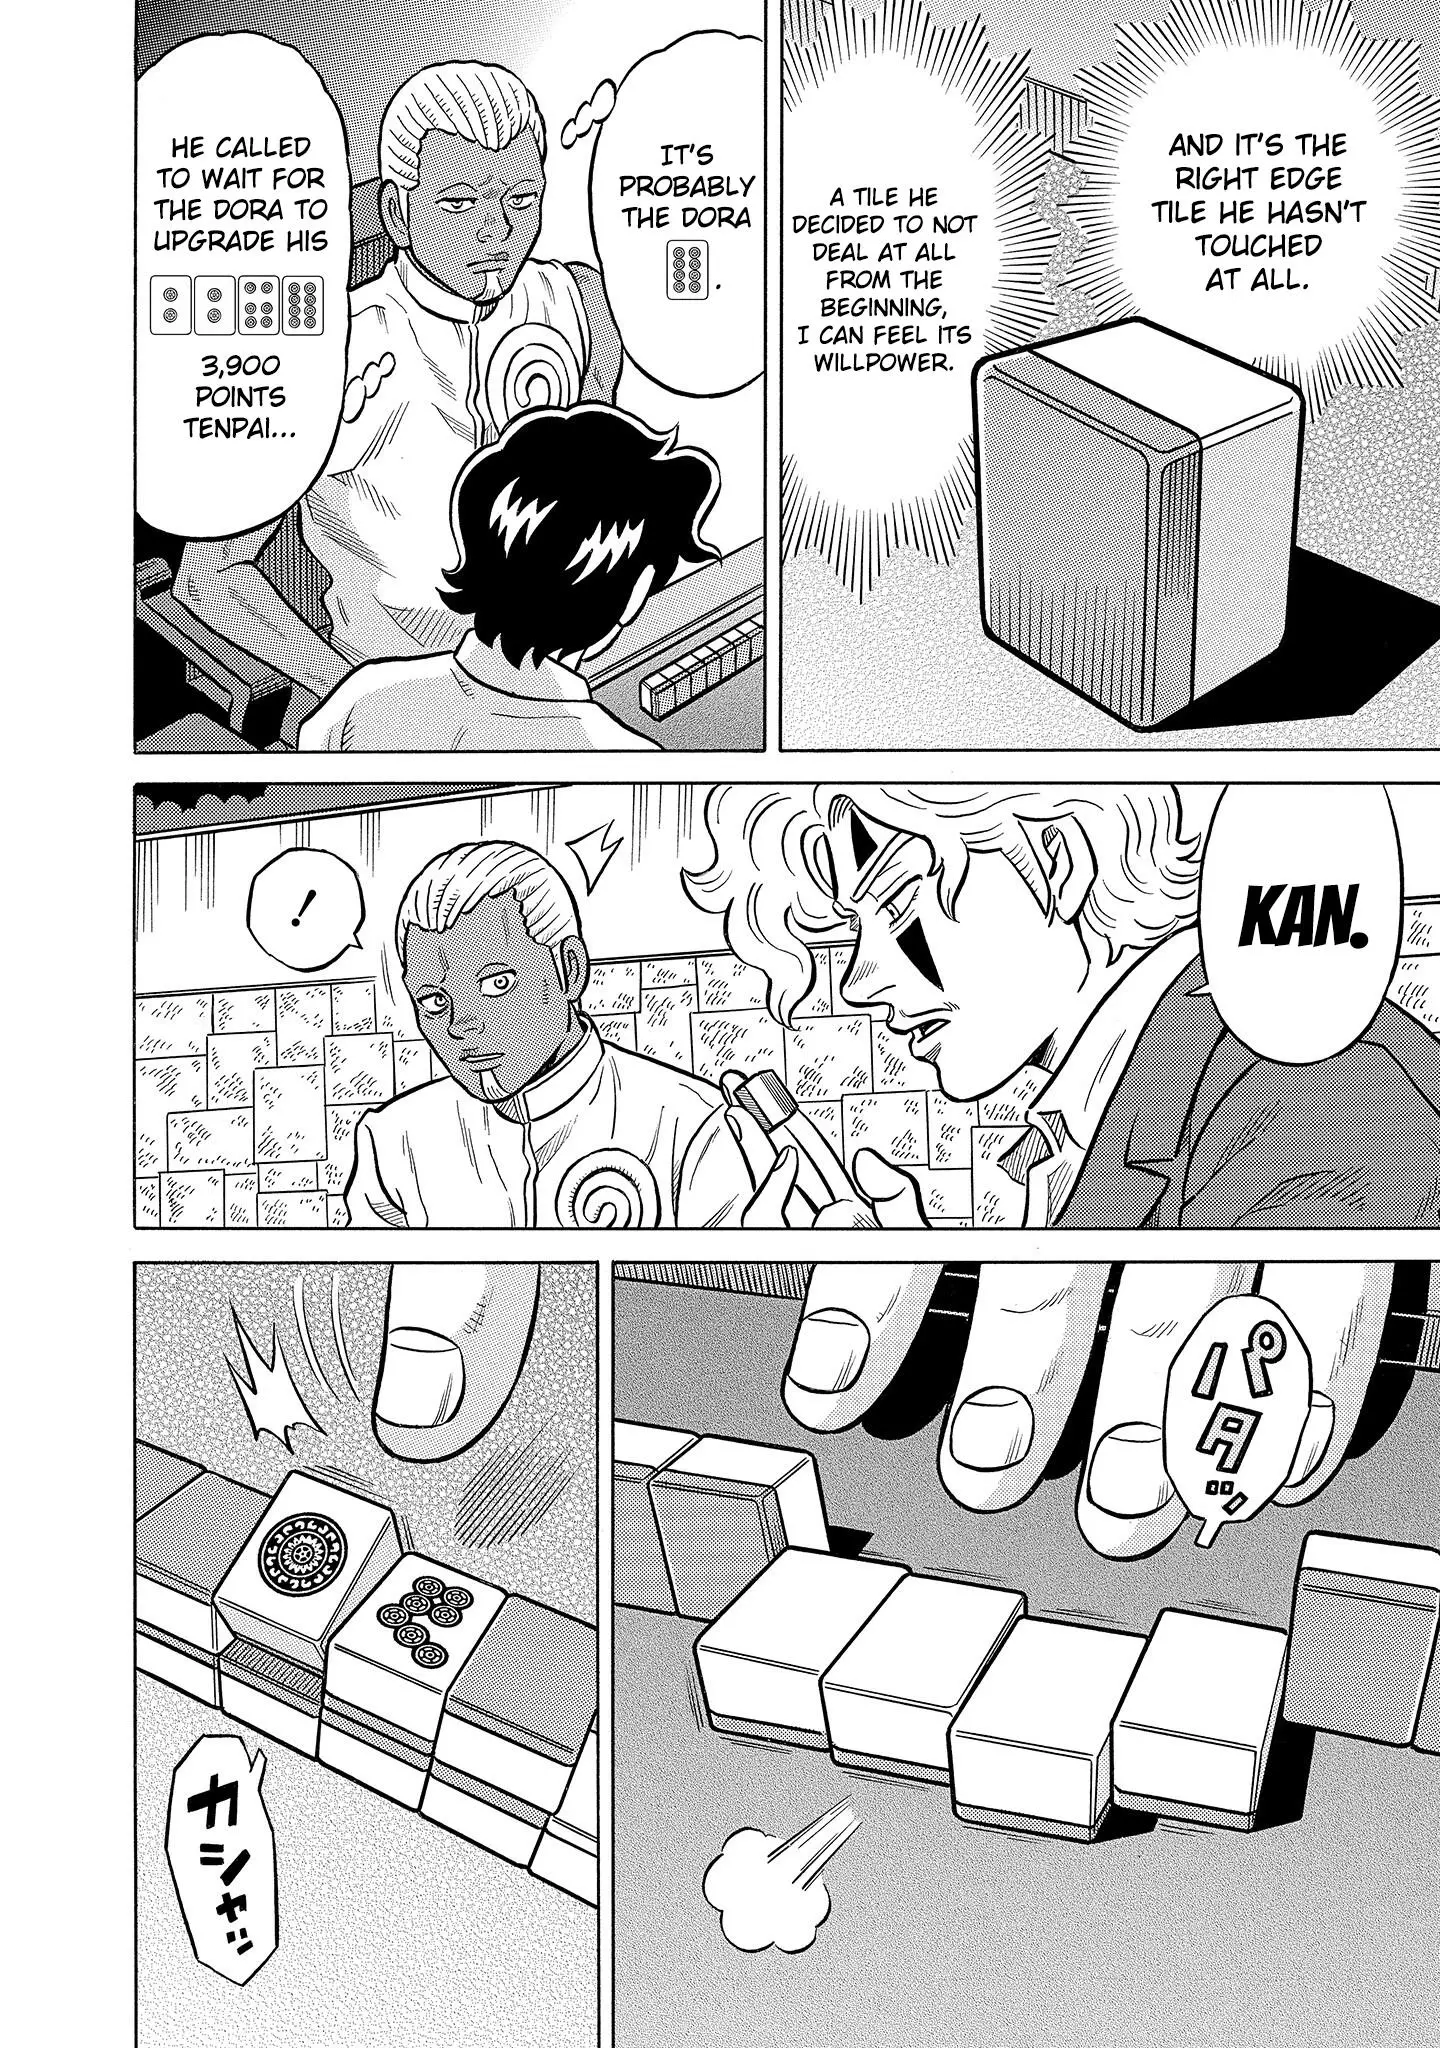 Kirinji Gate - 53 page 20-1ae4aaa4